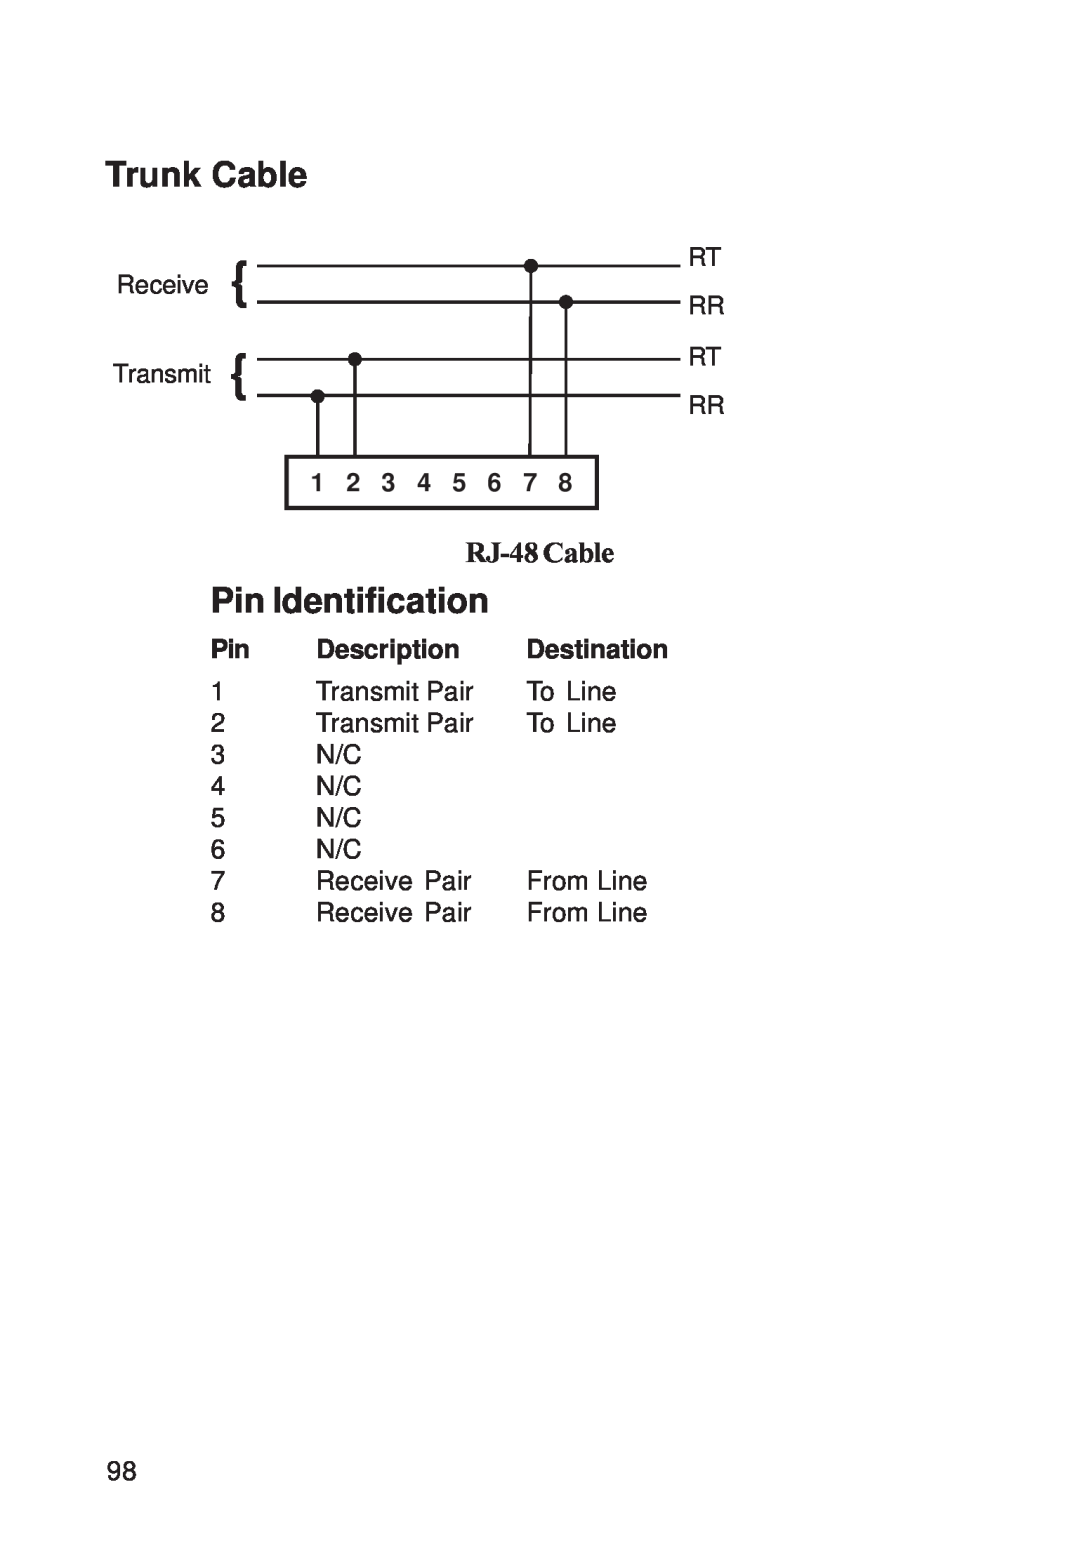 Multi-Tech Systems FR111 owner manual Trunk Cable, Pin Identification, RJ-48 Cable, 1 2 3 4 5 6 7, Destination, Description 